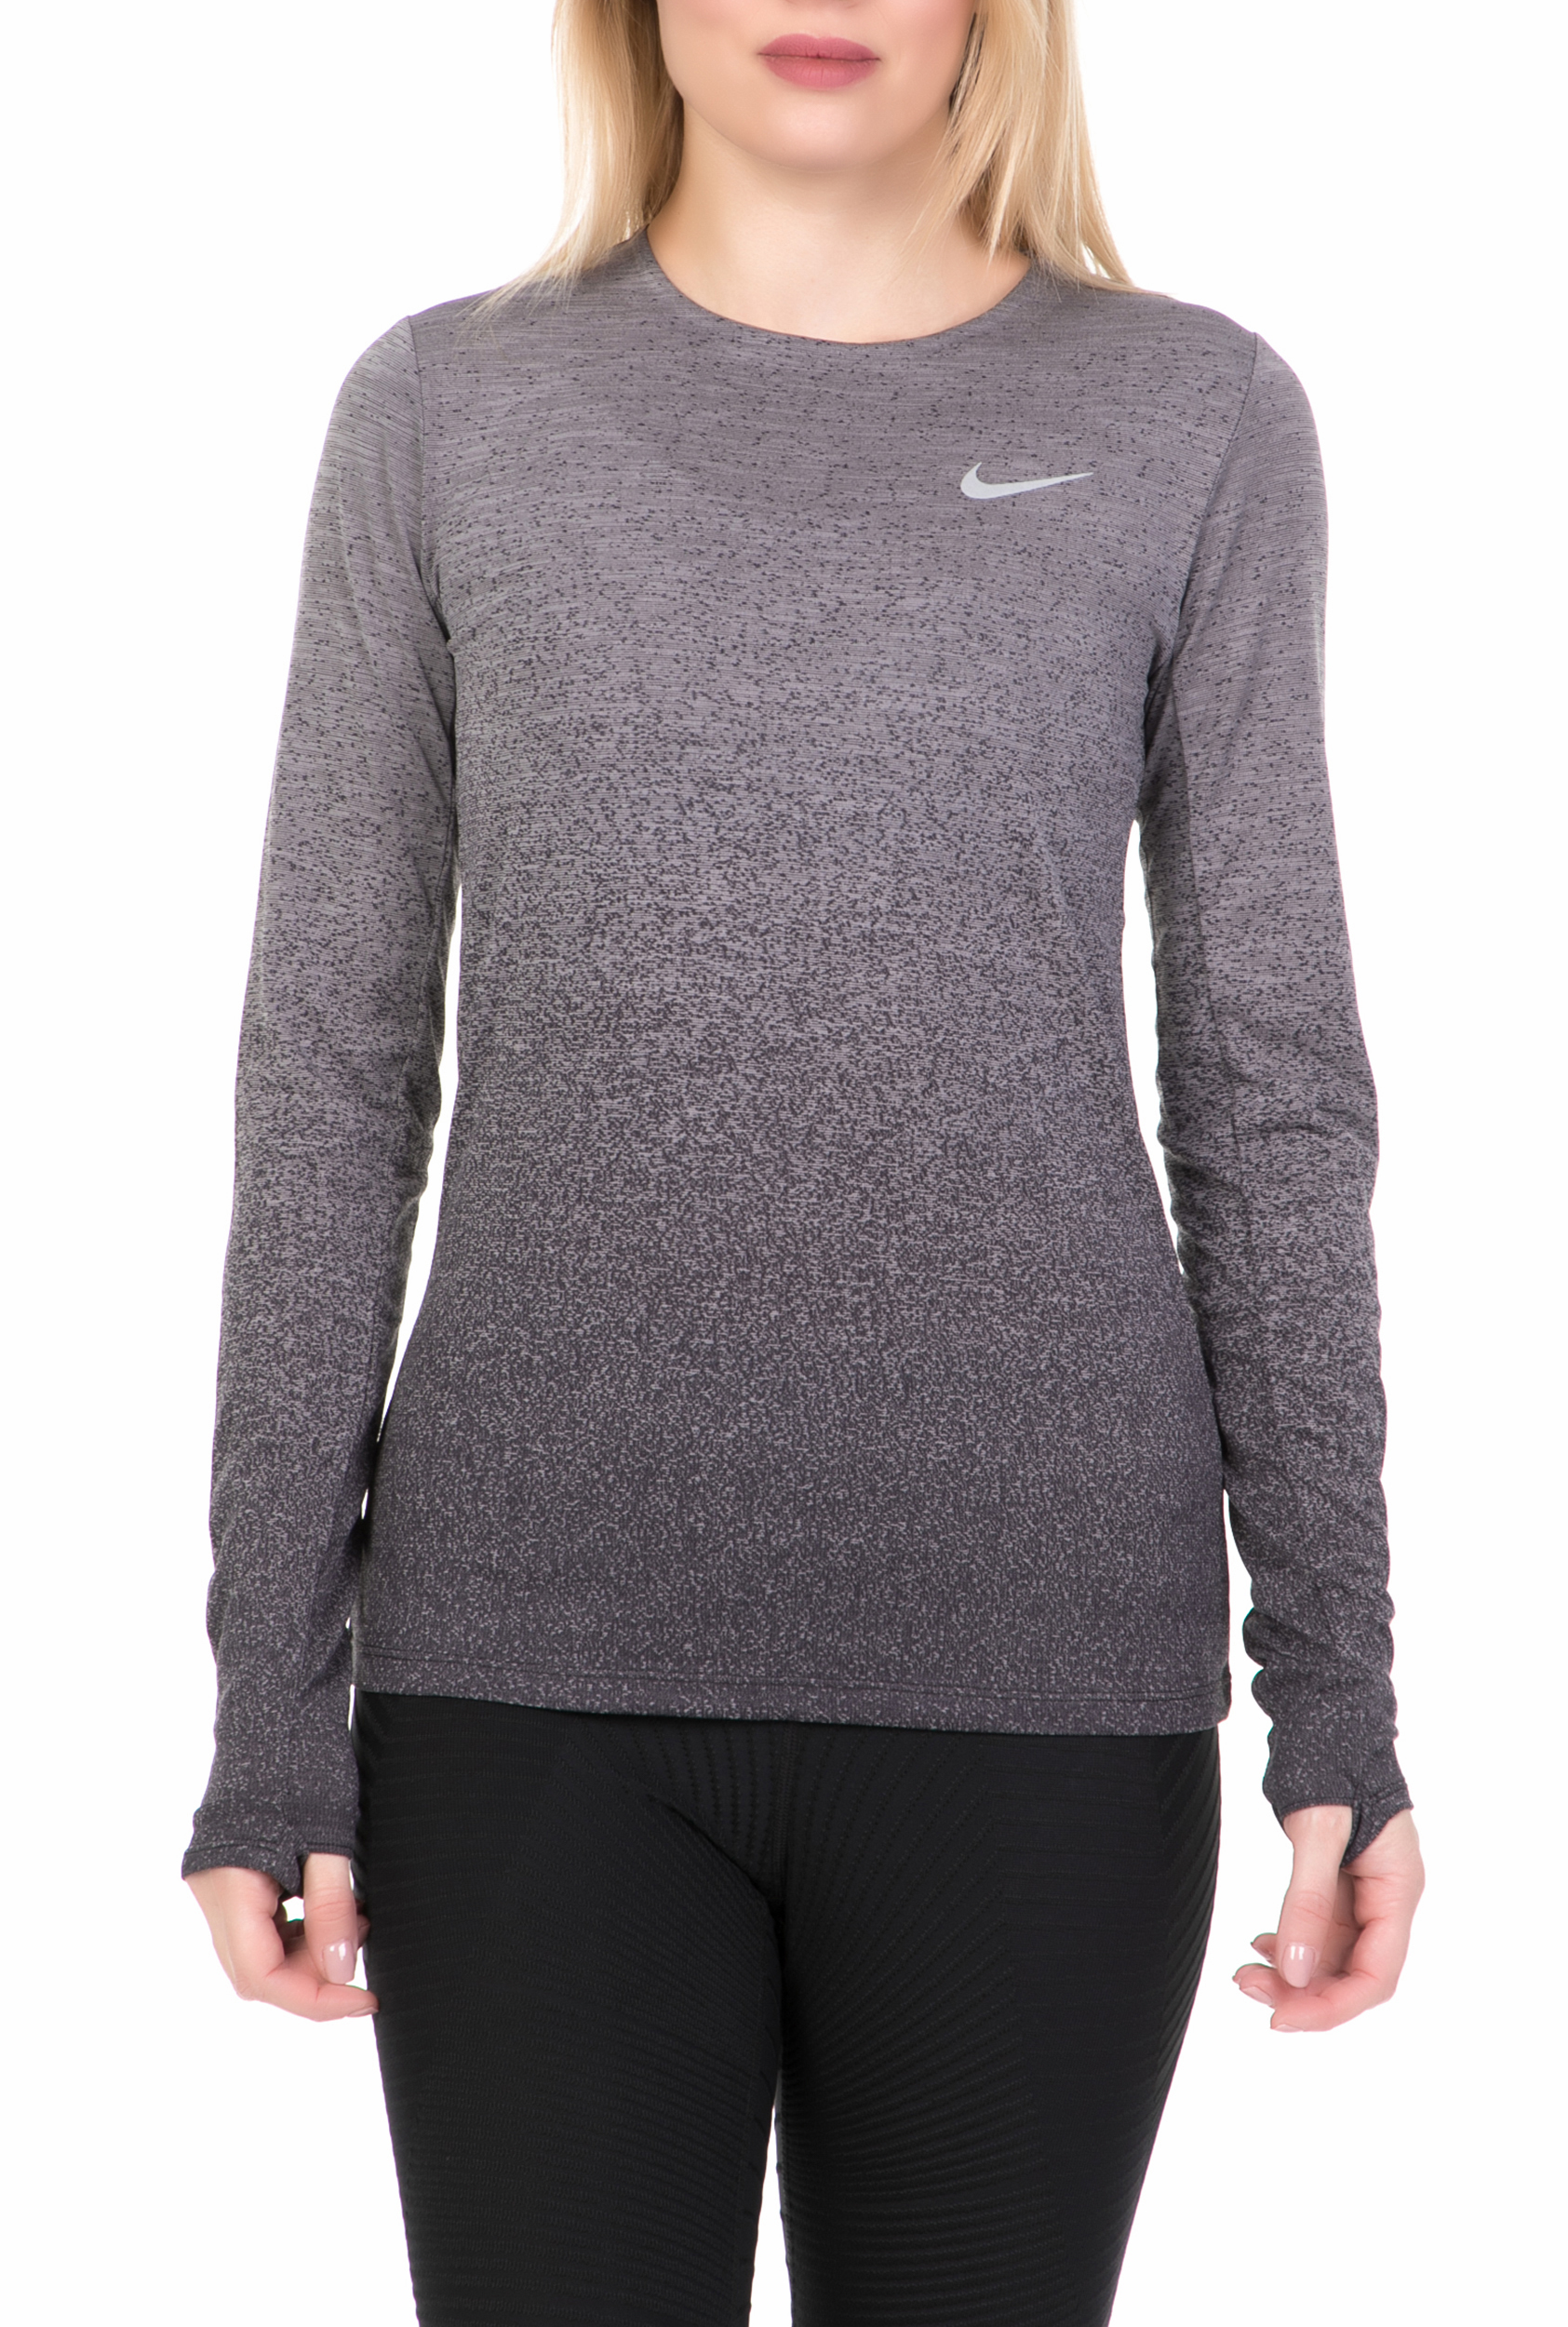 NIKE – Γυναικεία μακρυμάνικη μπλούζα για τρέξιμο Nike Medalist γκρι